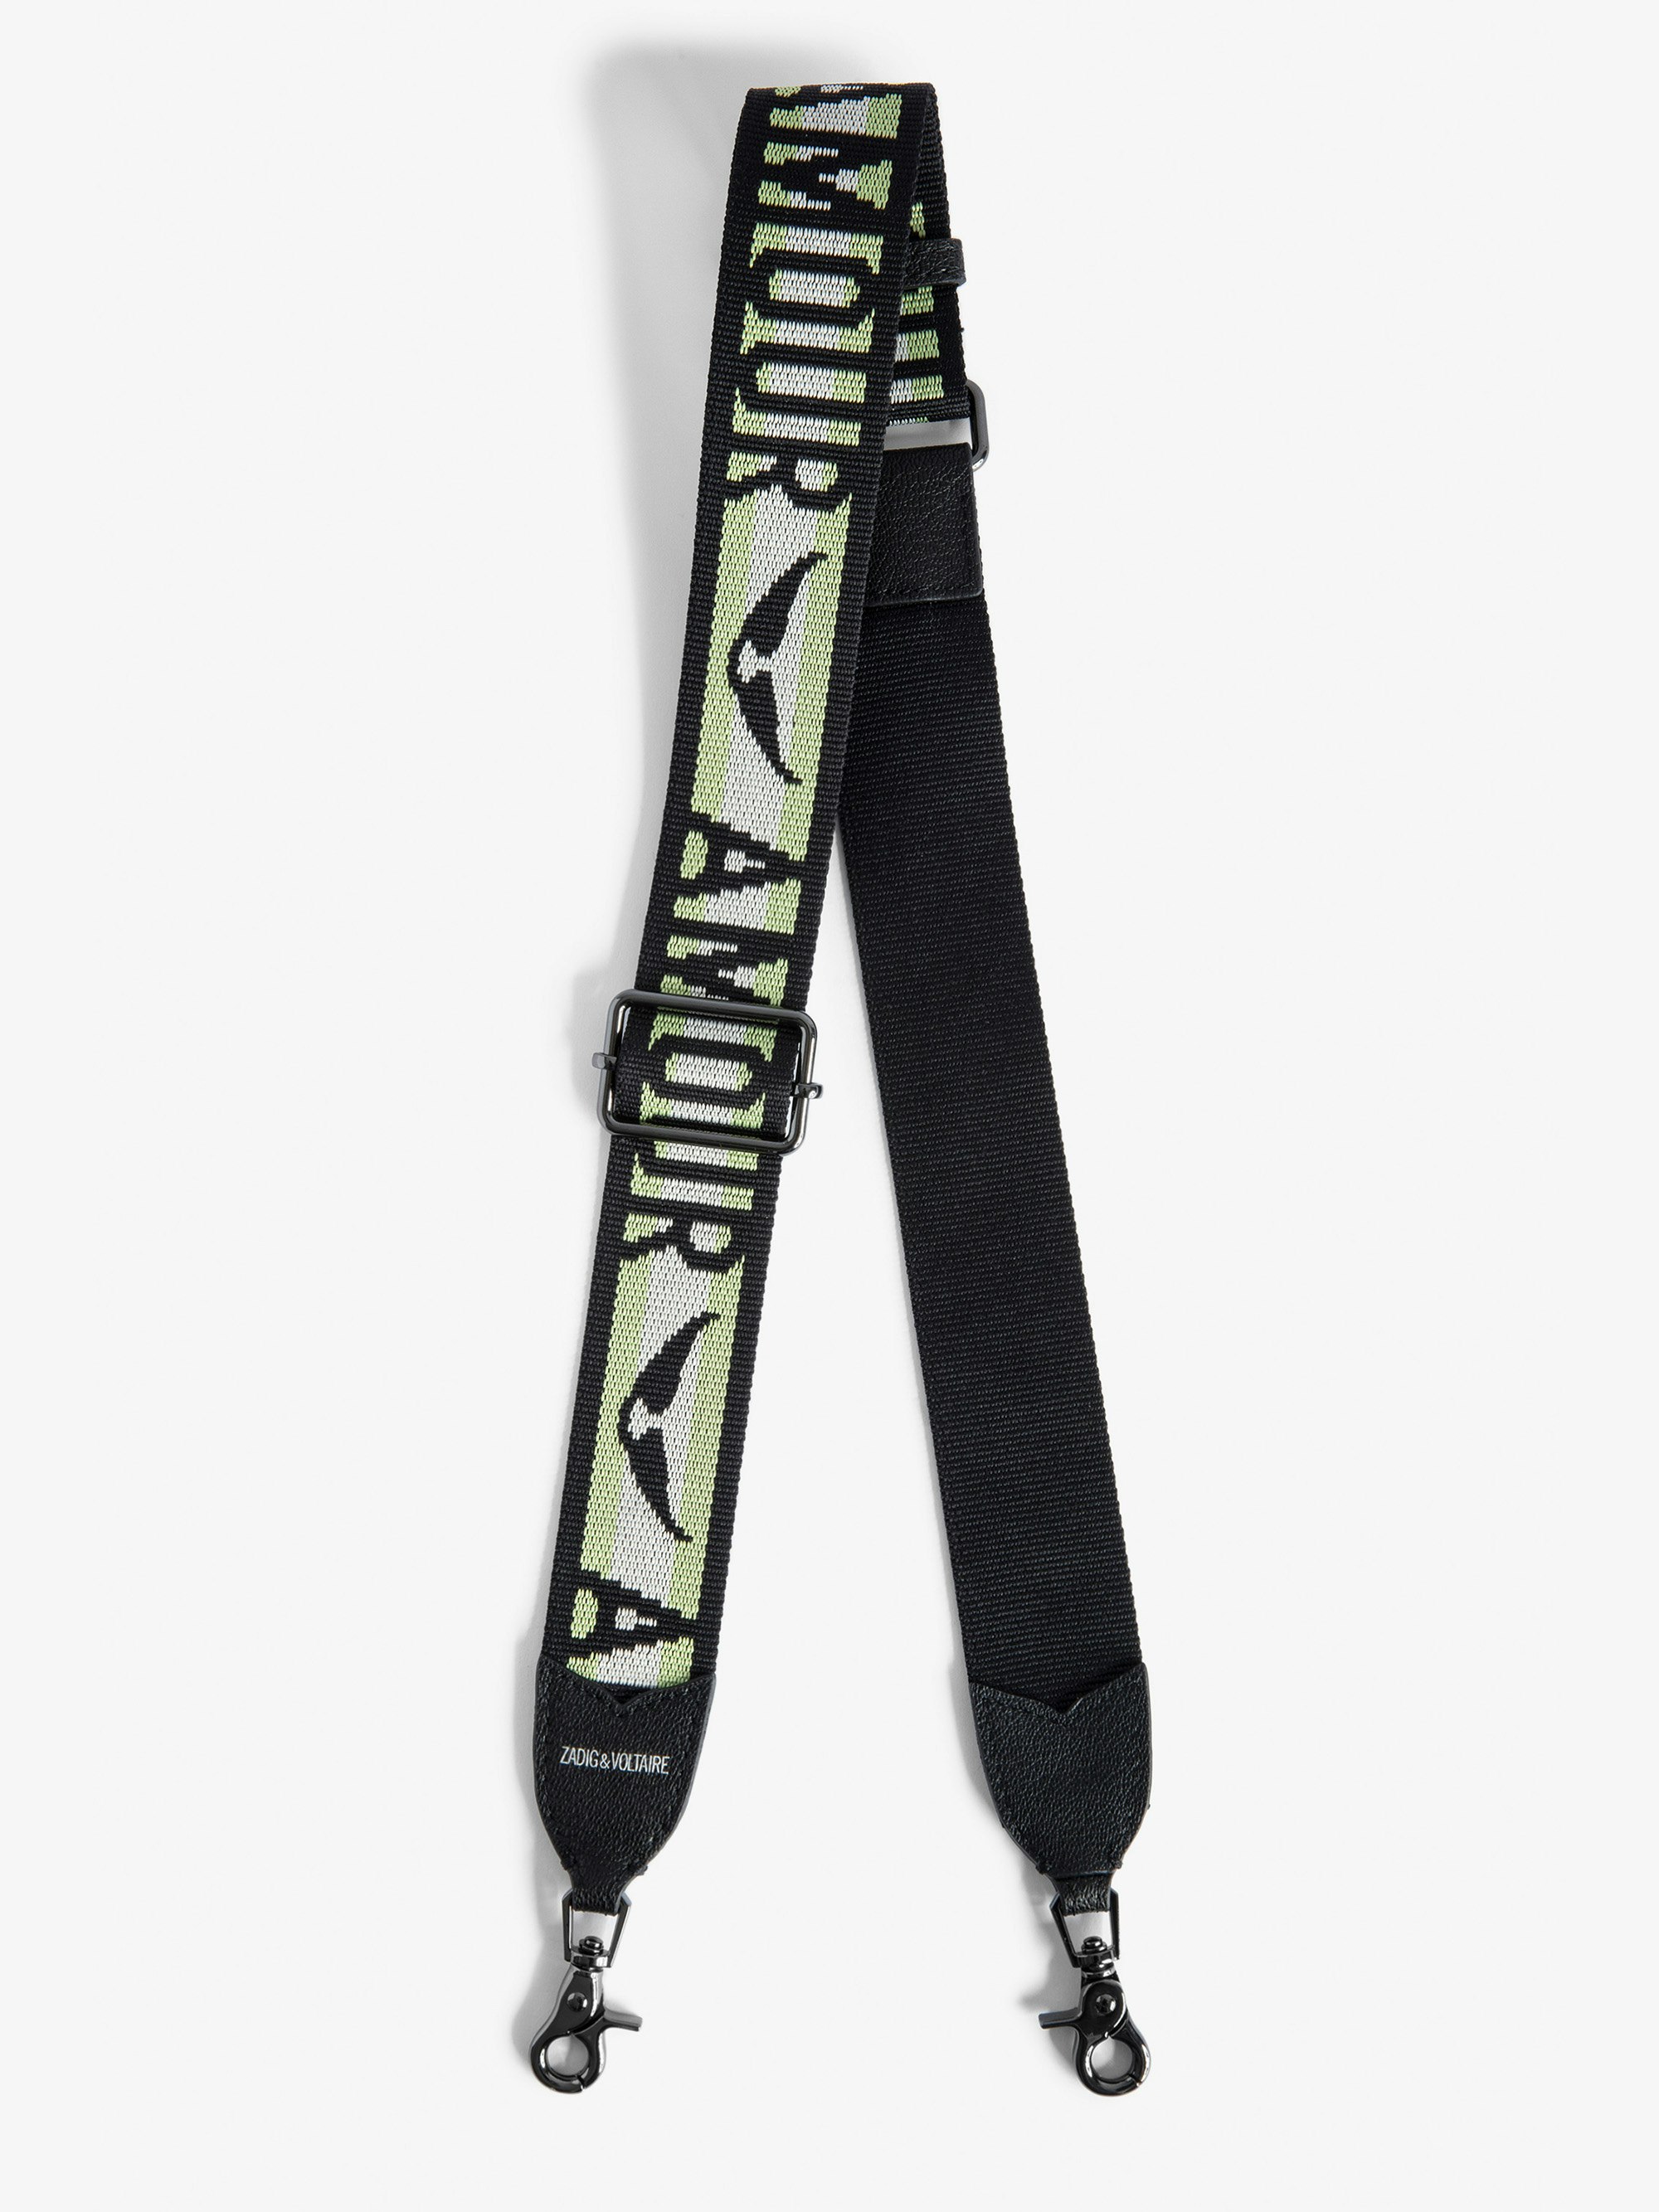 Zadig Shoulder Strap - Women’s green shoulder strap with “Amour” slogan and wings motif.